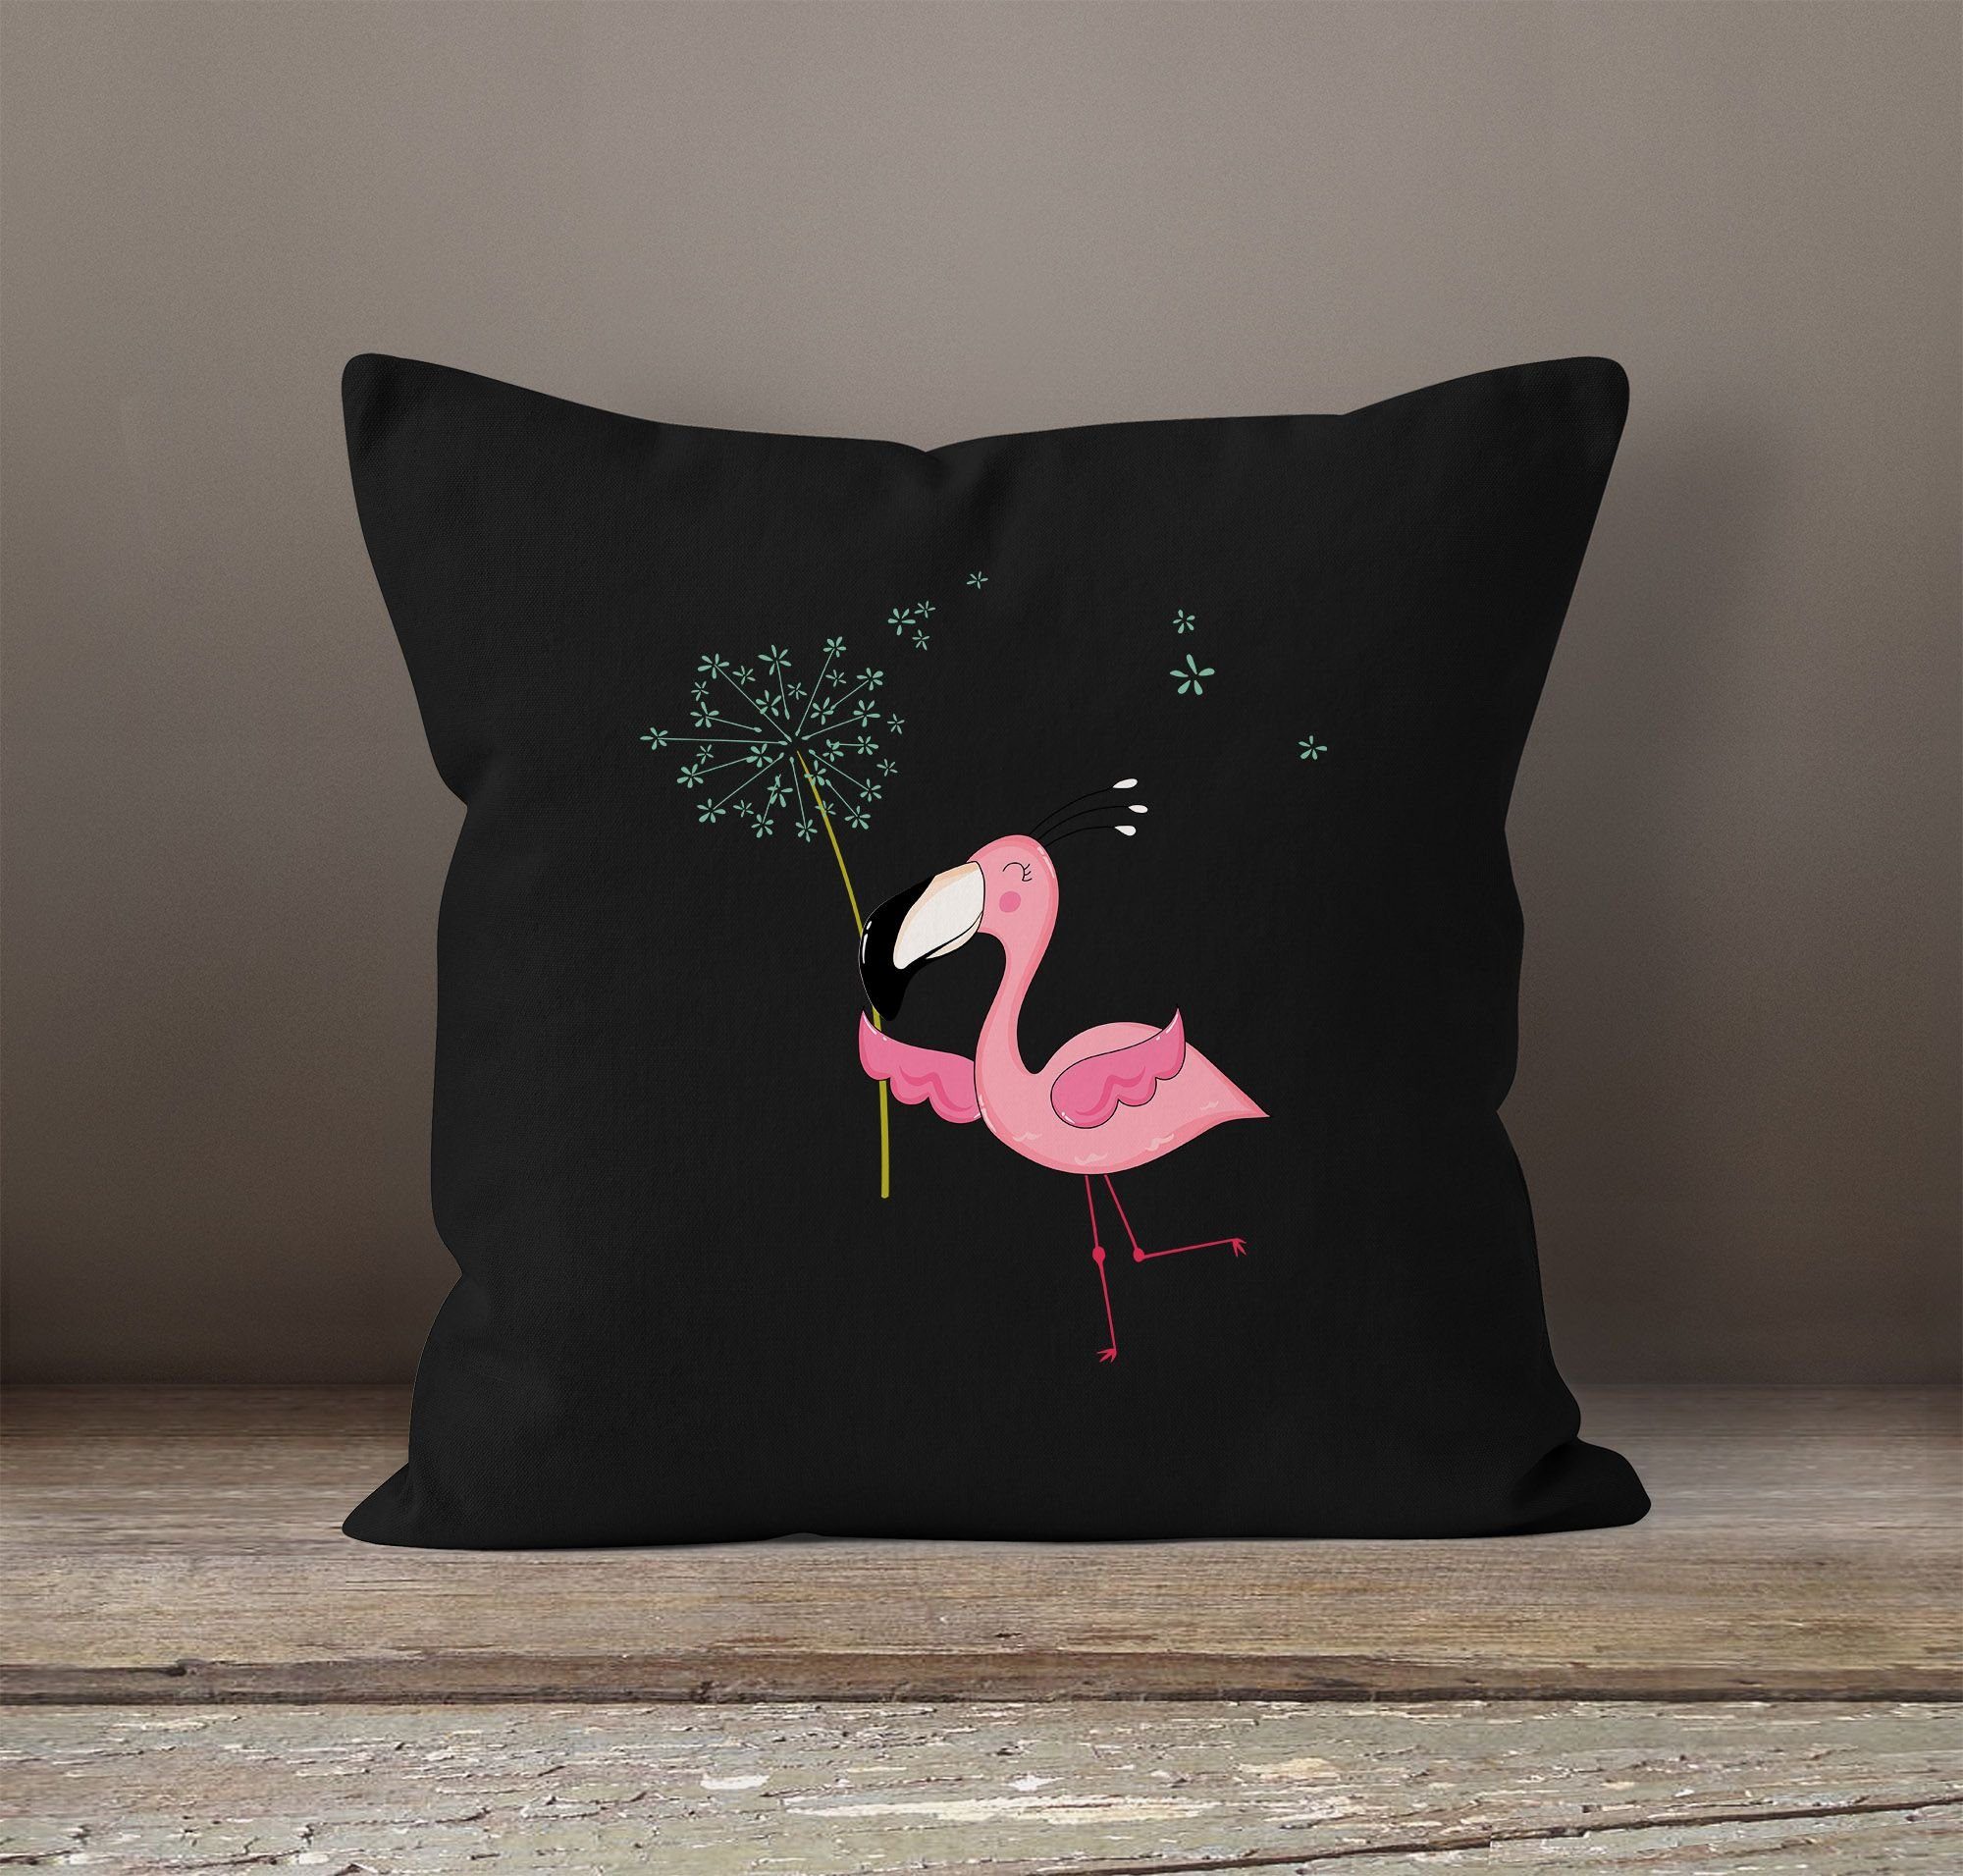 Dandelion schwarz Pusteblume MoonWorks Baumwolle Kissen-Hülle Kissen-Bezug Flamingo Dekokissen MoonWorks® Deko-Kissen